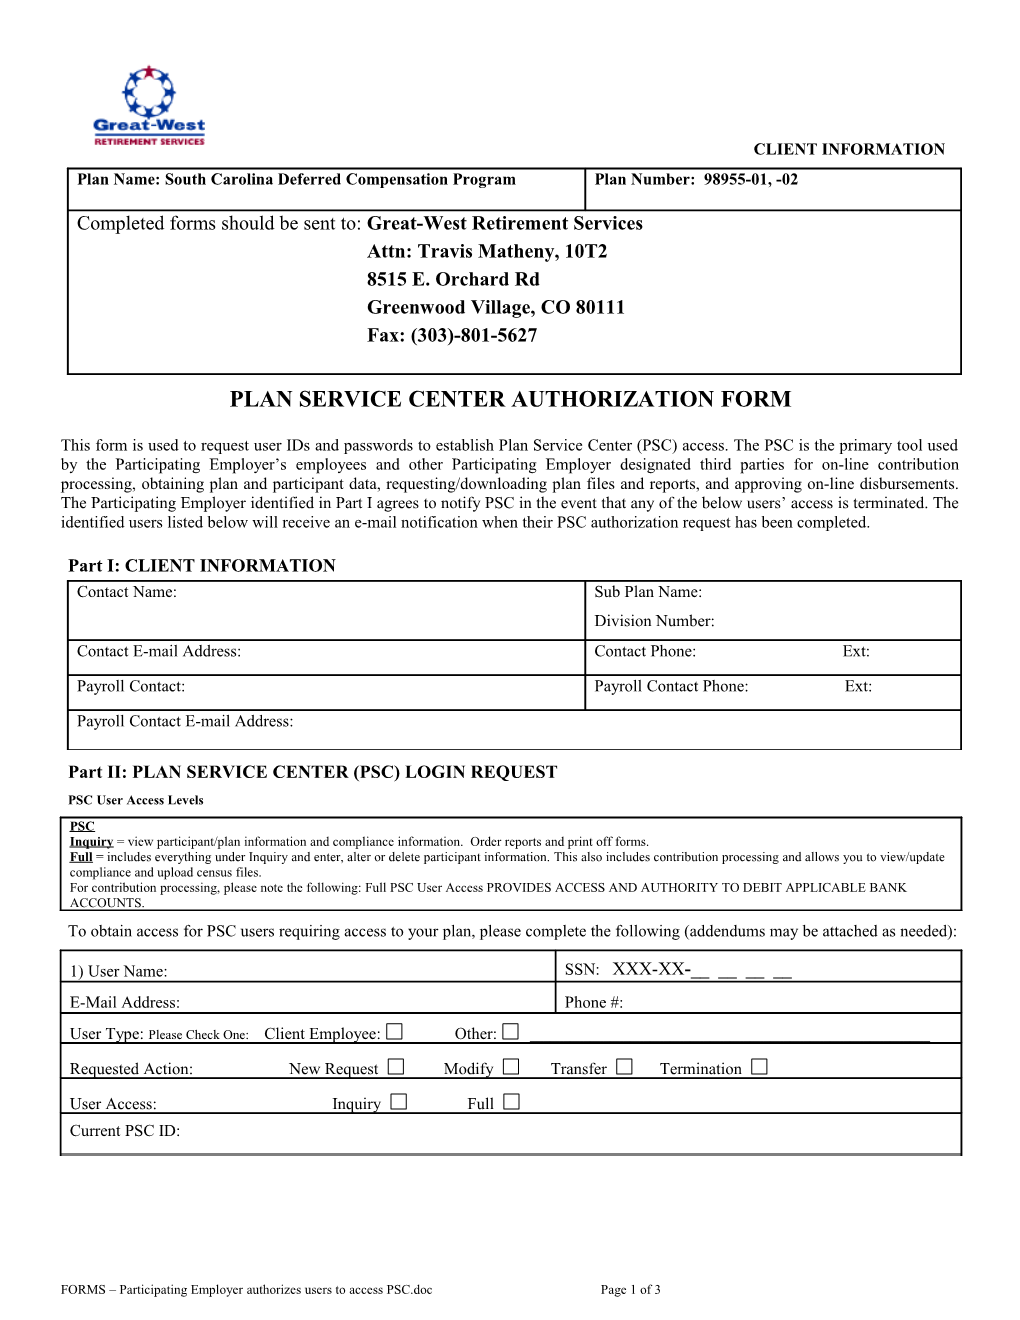 Plan Service Center Authorization Form